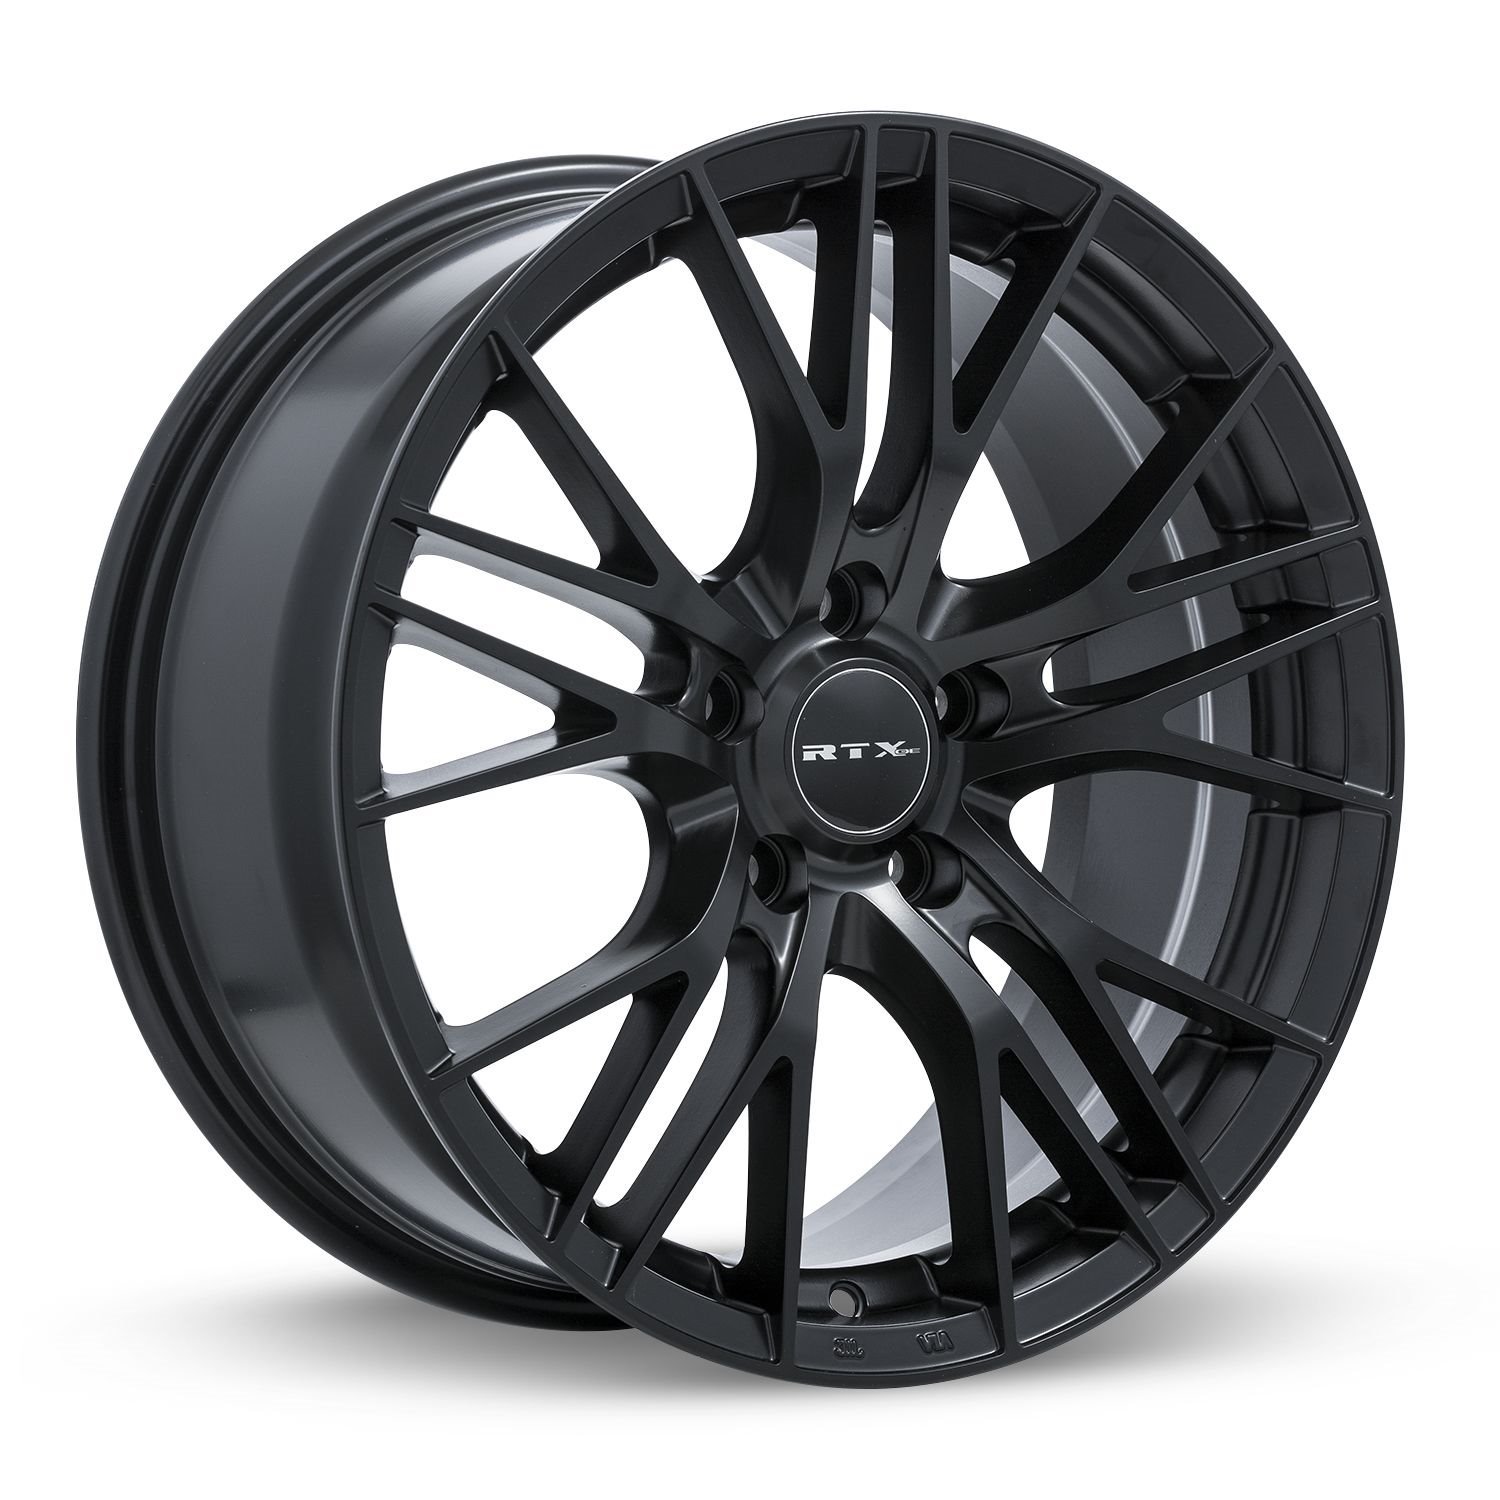 082306 RTX-Series Vertex Wheel [Size: 18" x 8"] Satin Black Finish